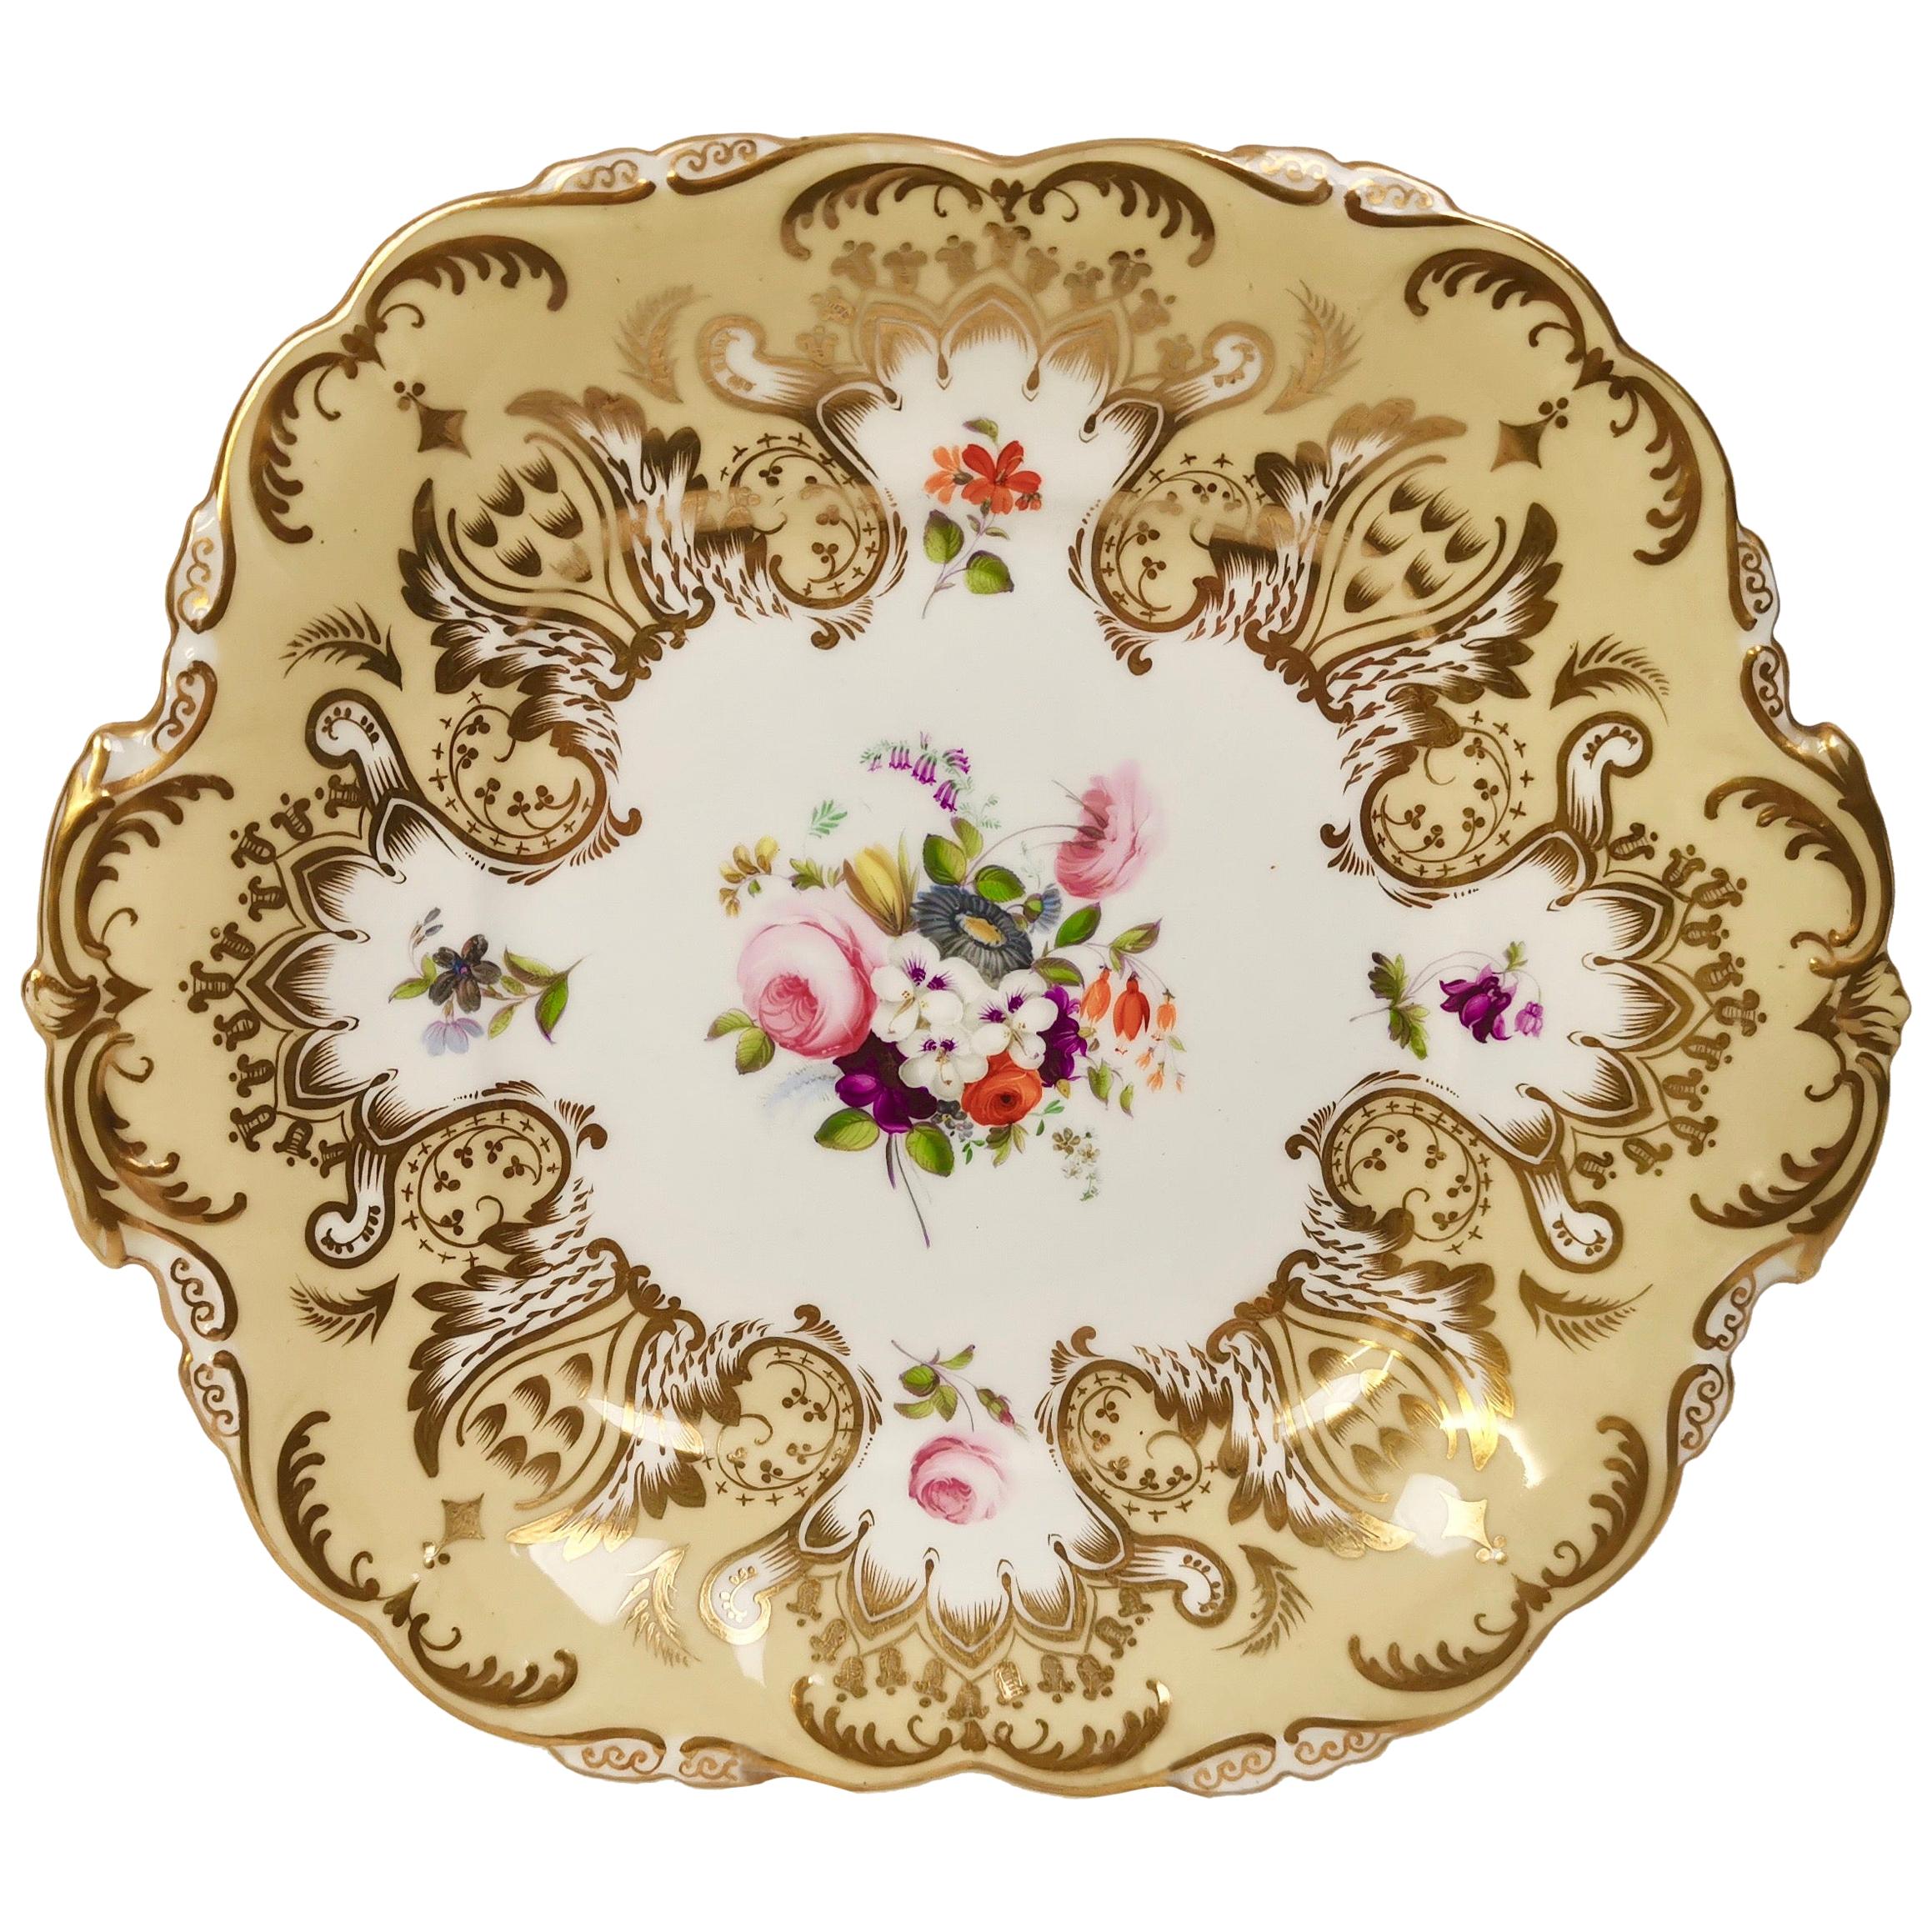 Coalport Porcelain Cake Plate, Beige and Gilt, Flowers by Thomas Dixon, 1837